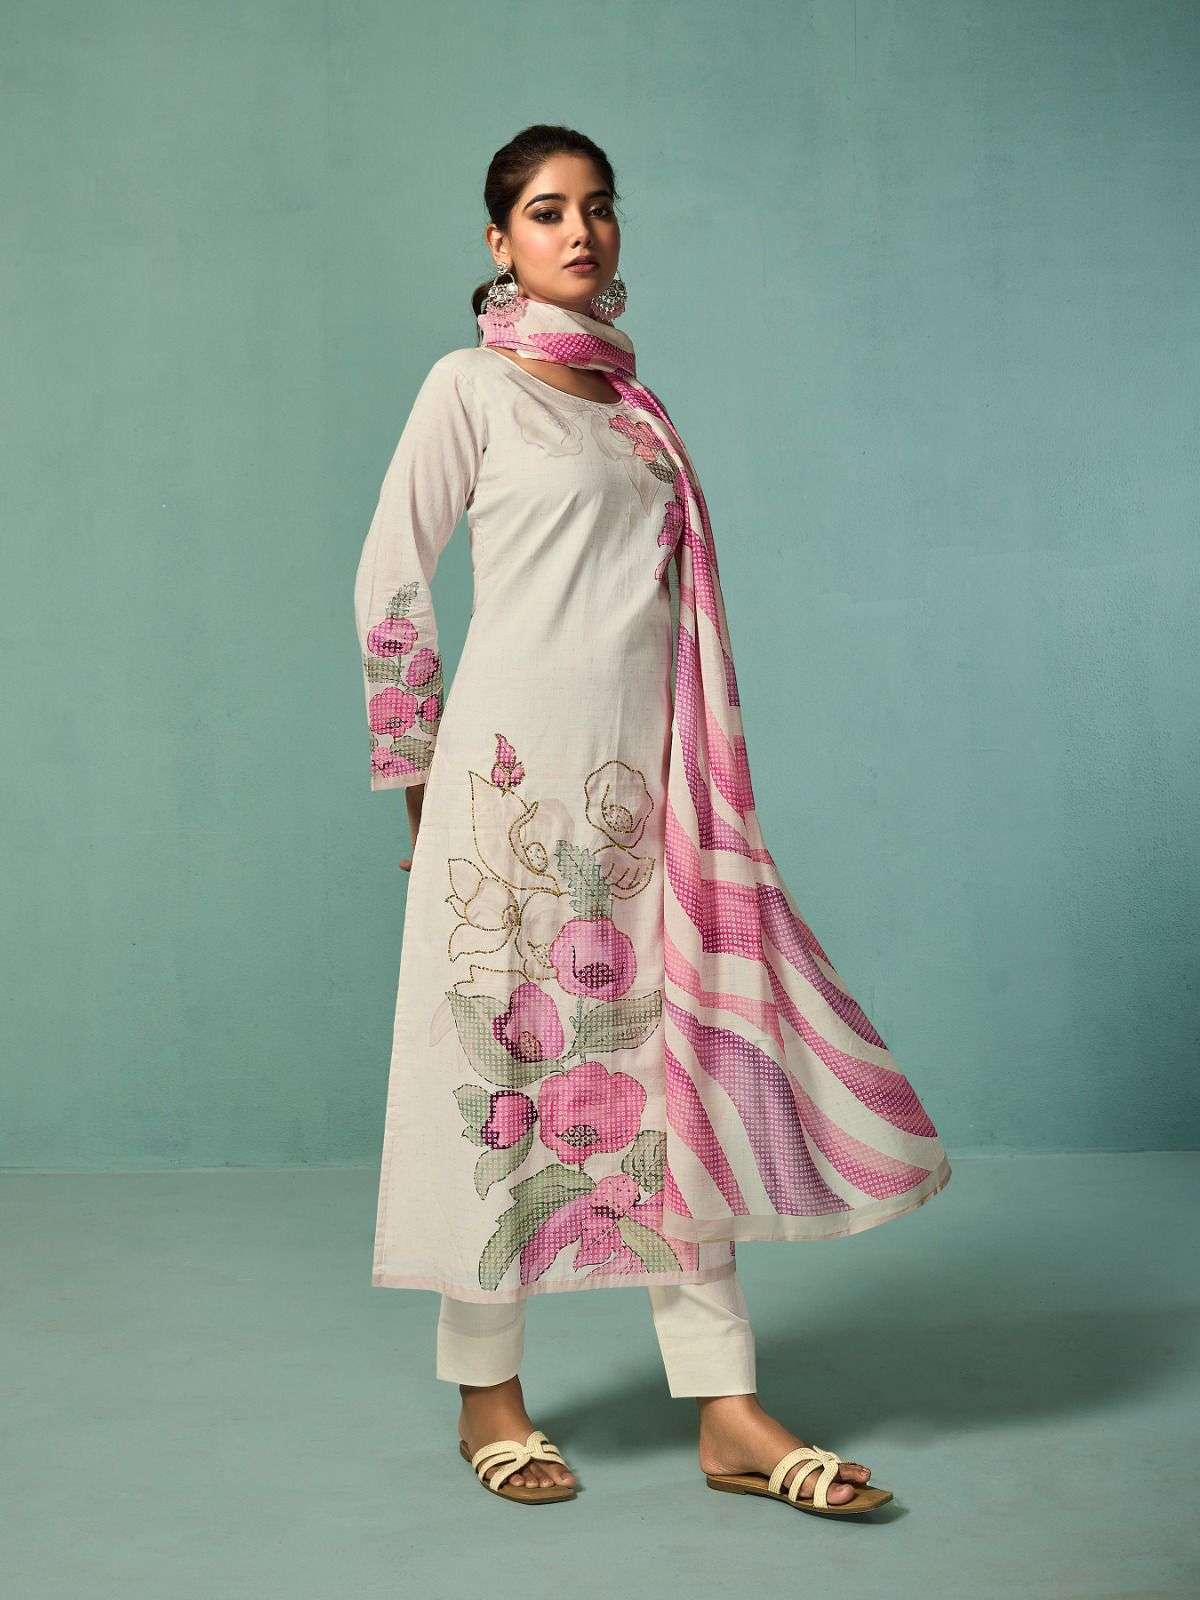 SHIVAAY IZHAAR Dress Materials Wholesale catalog